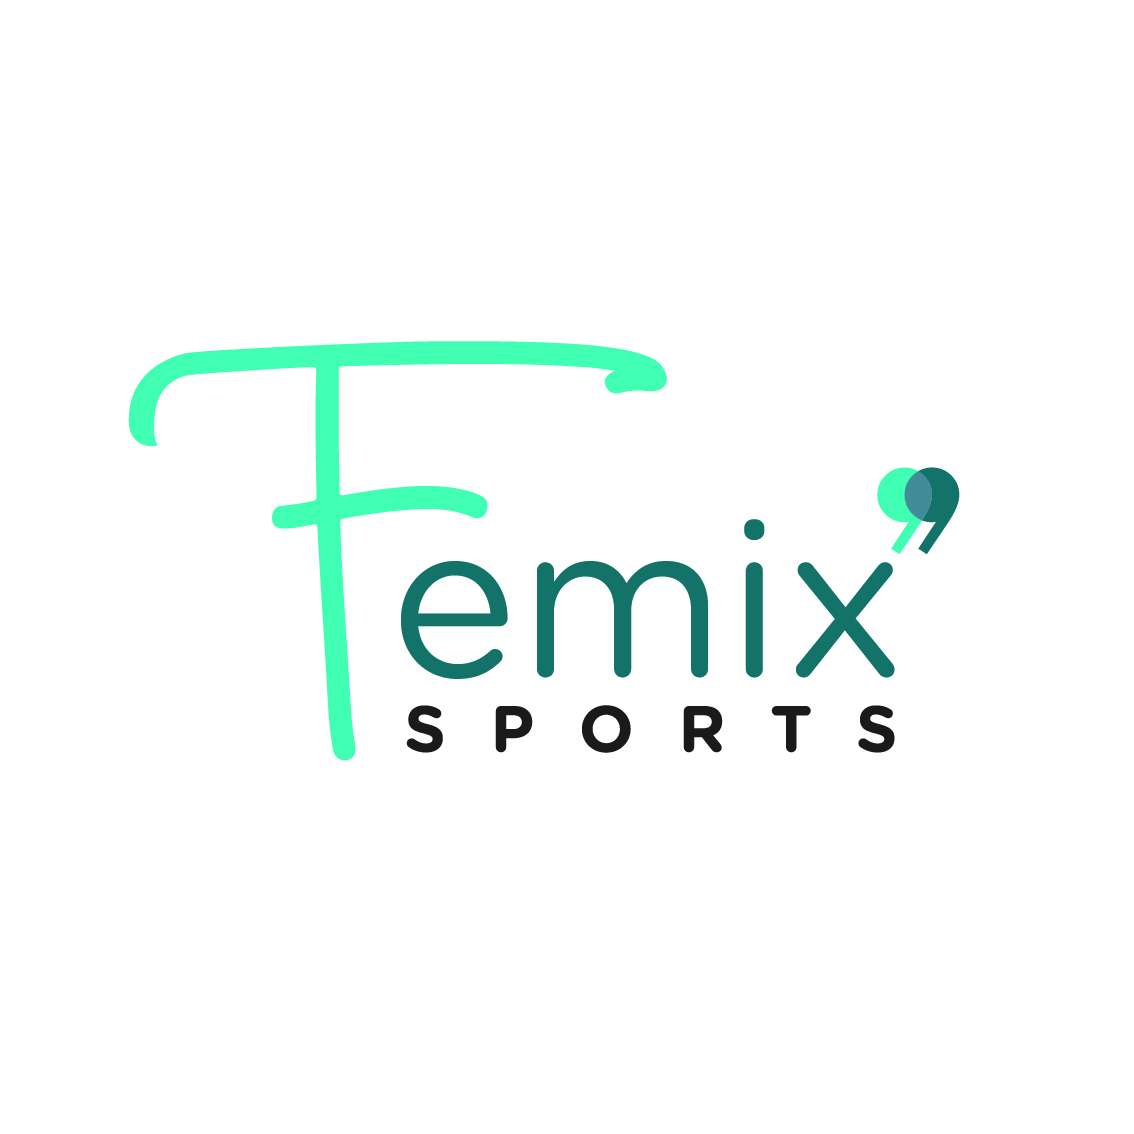  Logo Femix Sports 